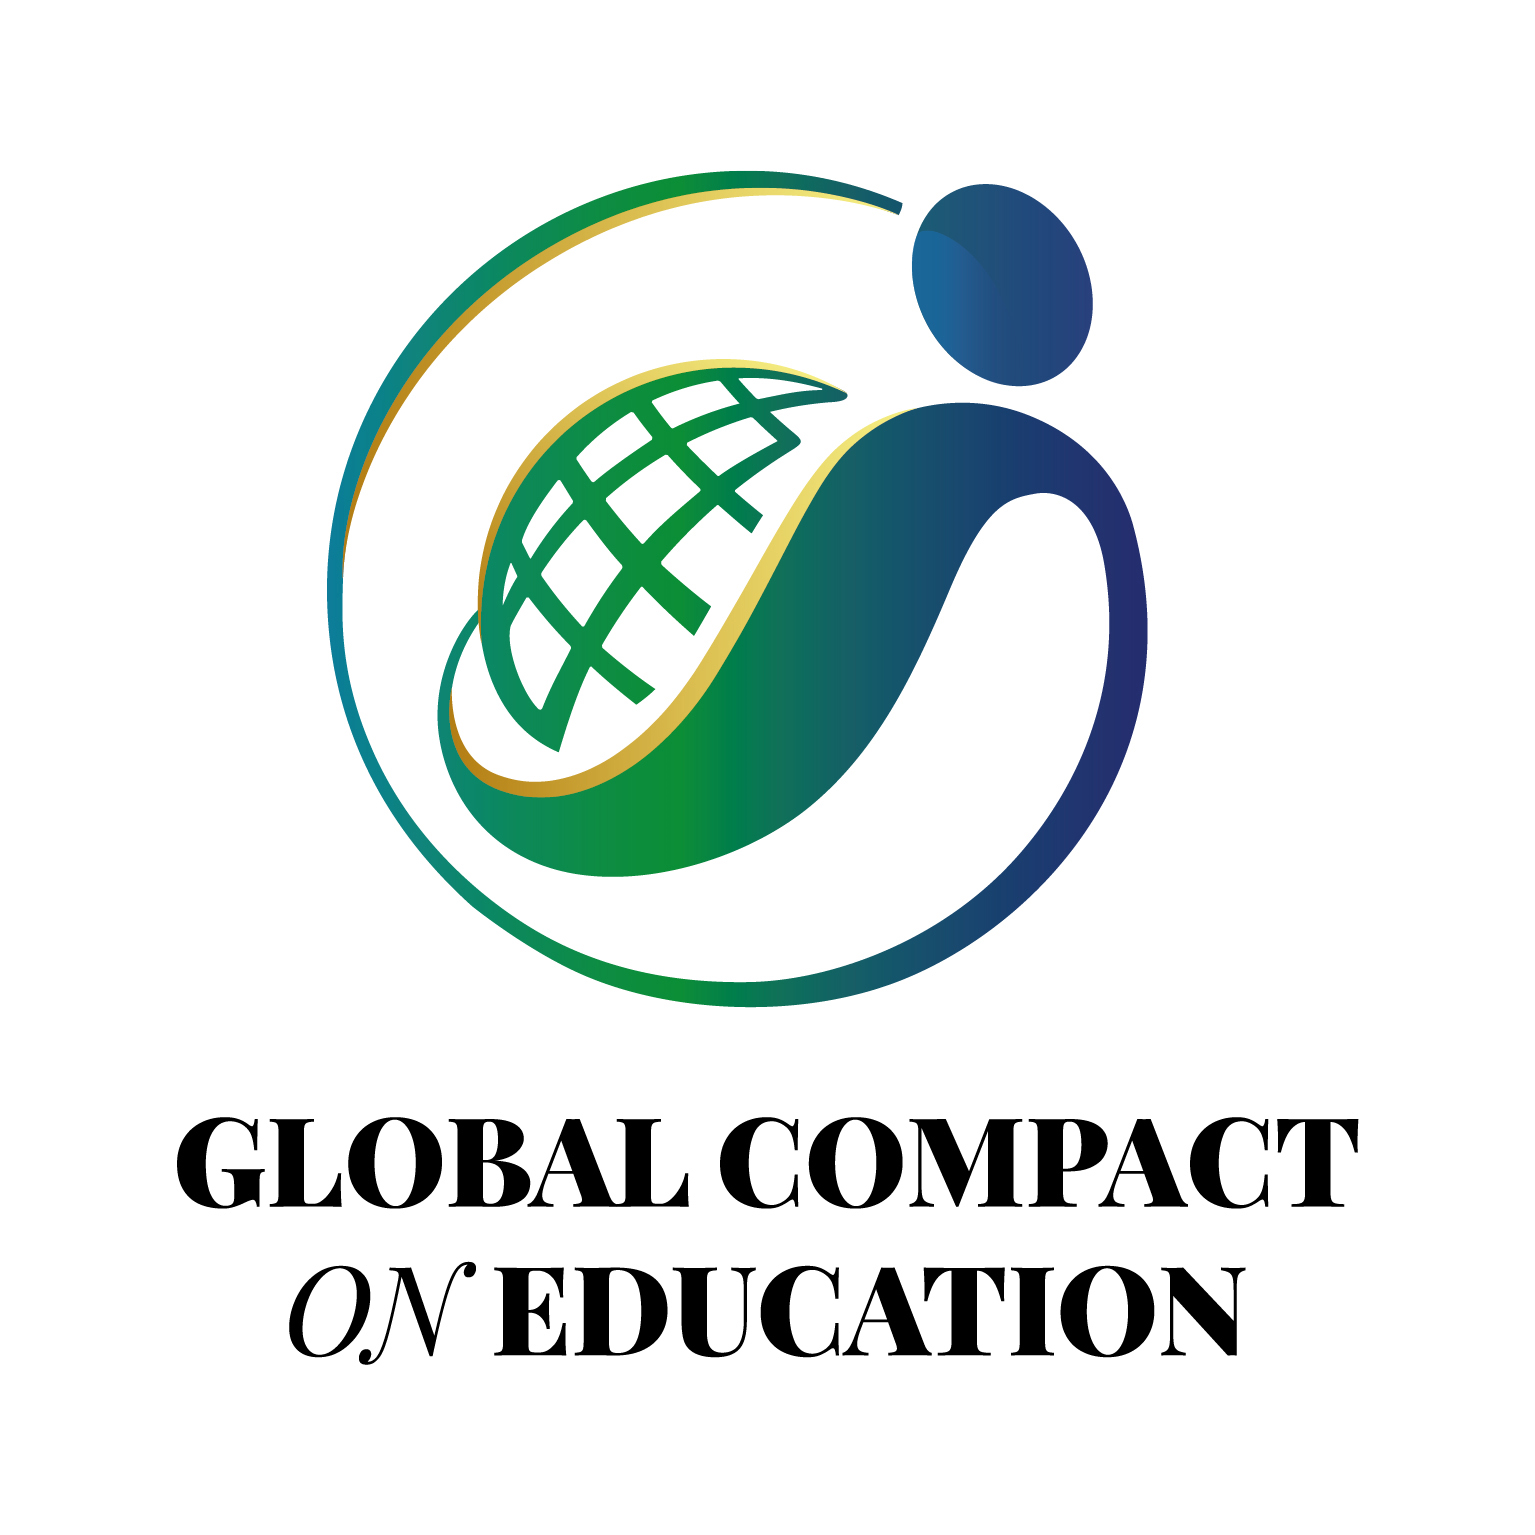 Global Compact on Education | Global Compact on Education